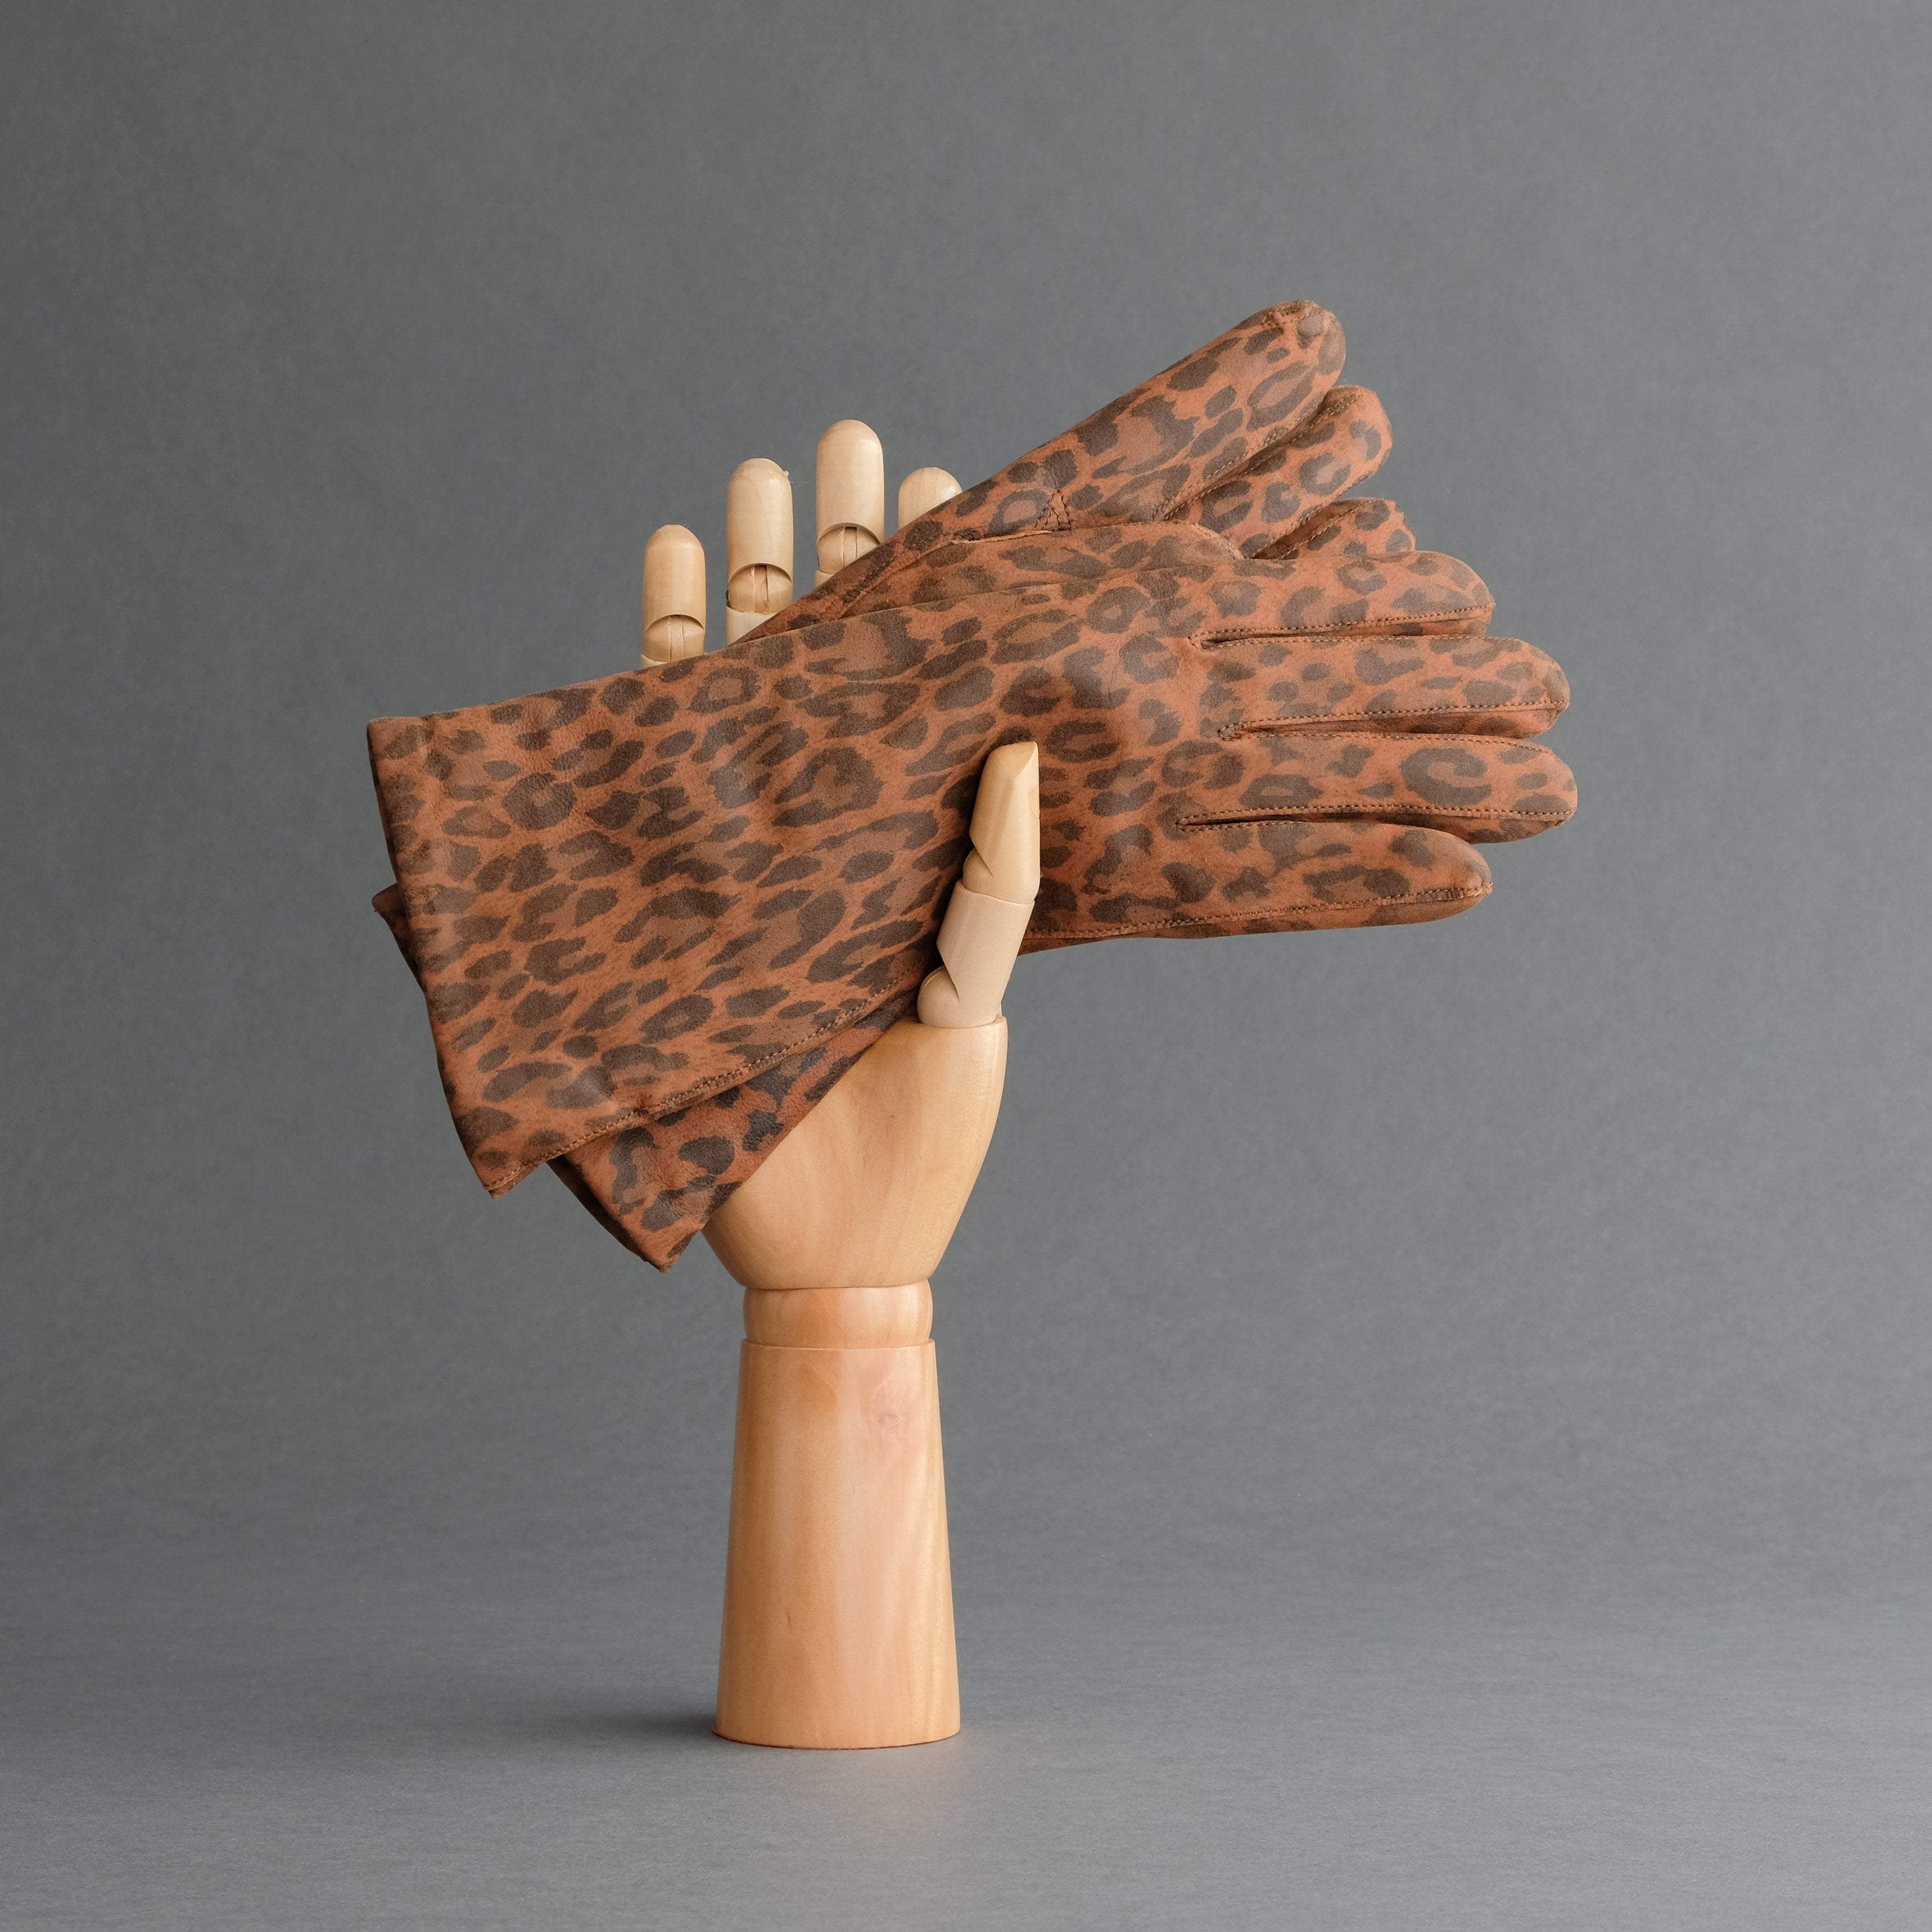 Ladies Gloves from Hair Sheep Nappa In Leopard Print - TR Handschuhe Wien - Thomas Riemer Handmade Gloves